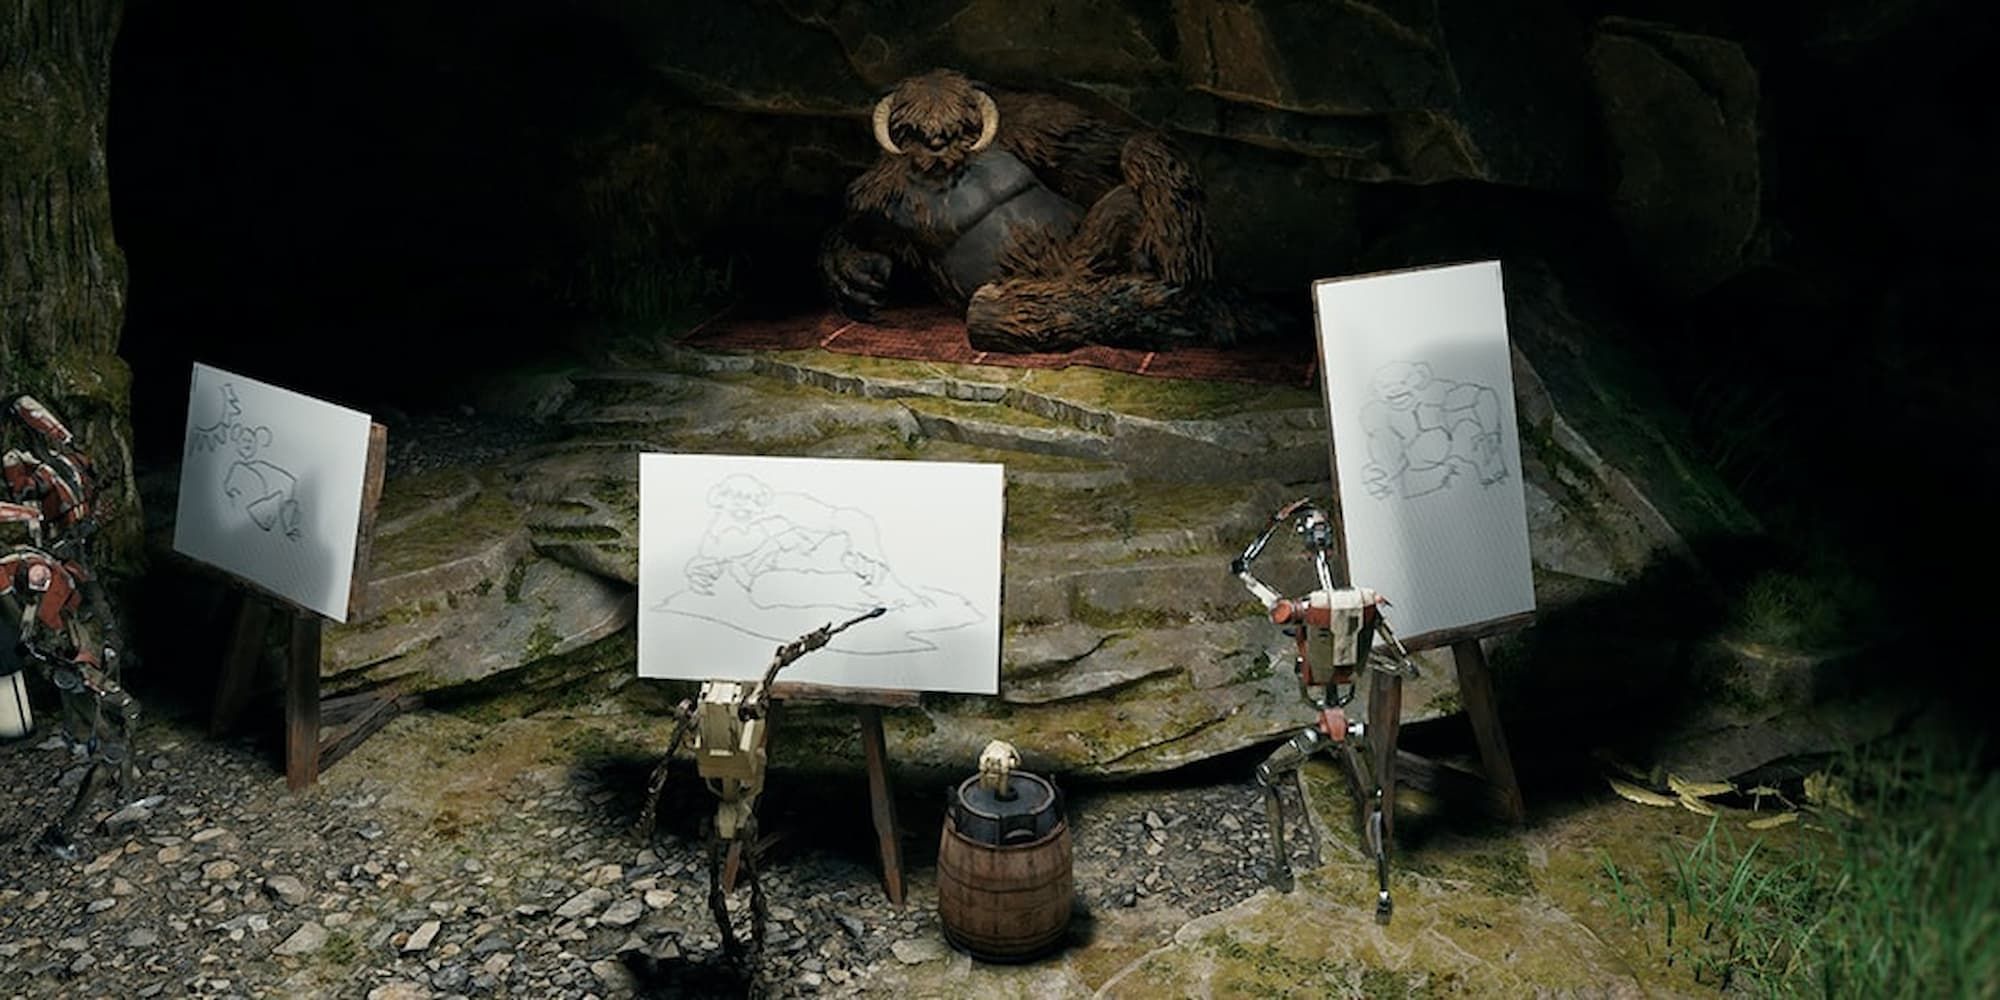 A Mogu poses while B1 Droids draw it in Star Wars Jedi: Survivor.